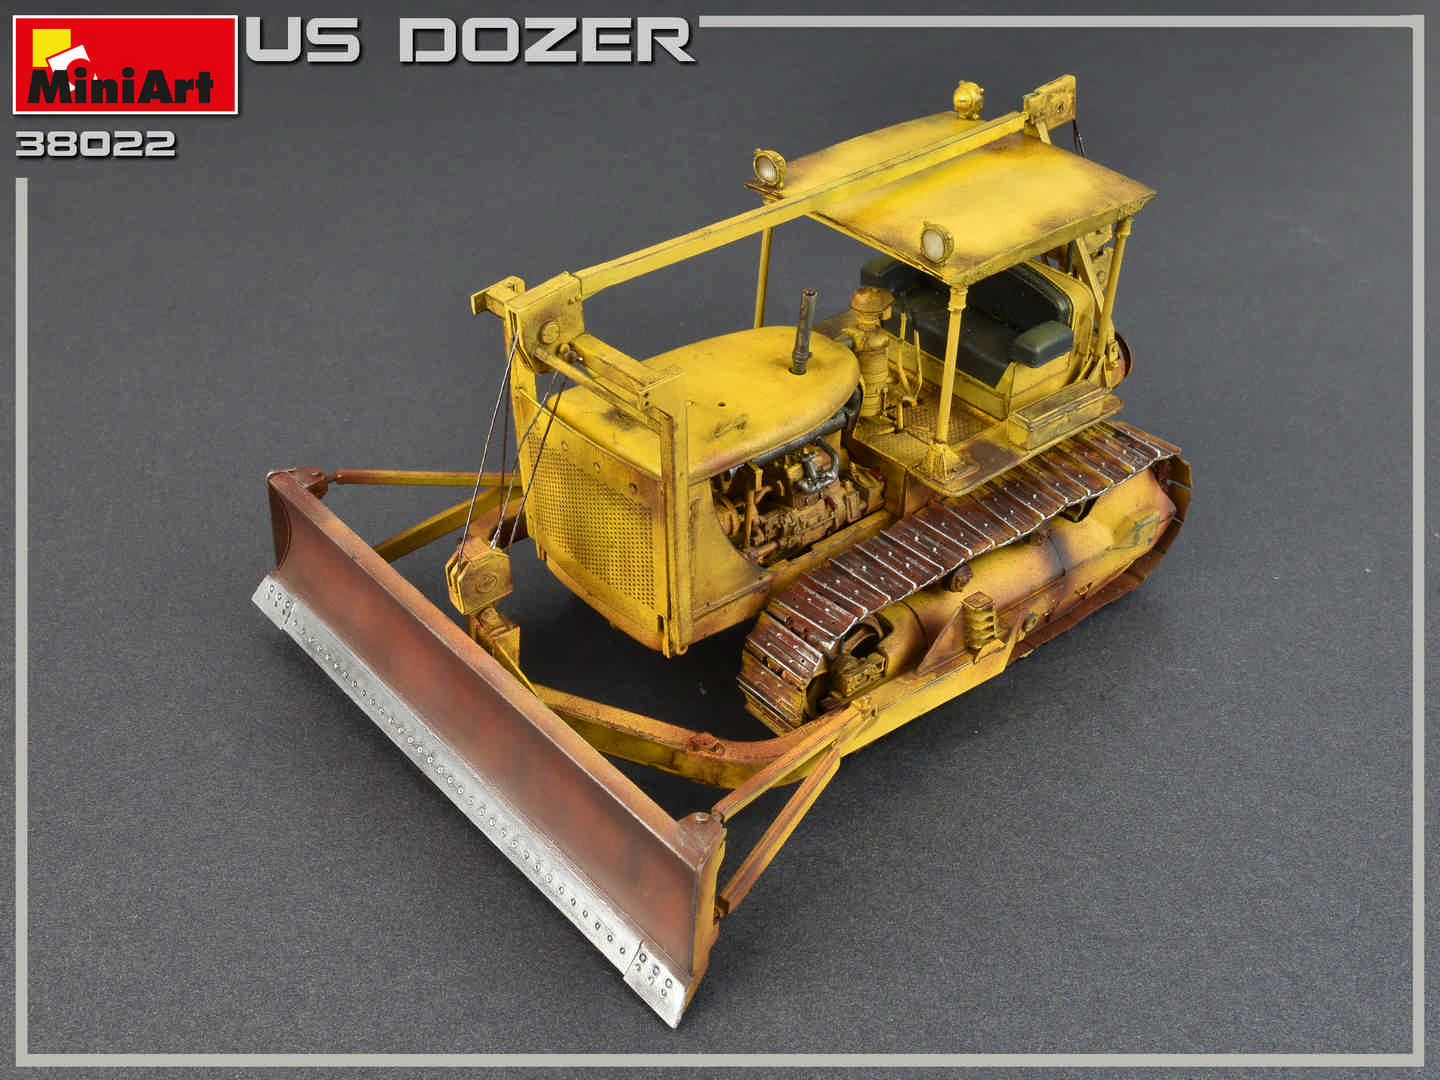 Bulldozer Scale Plastic Model Kit 1/35 for sale online MiniArt 38022 U.s